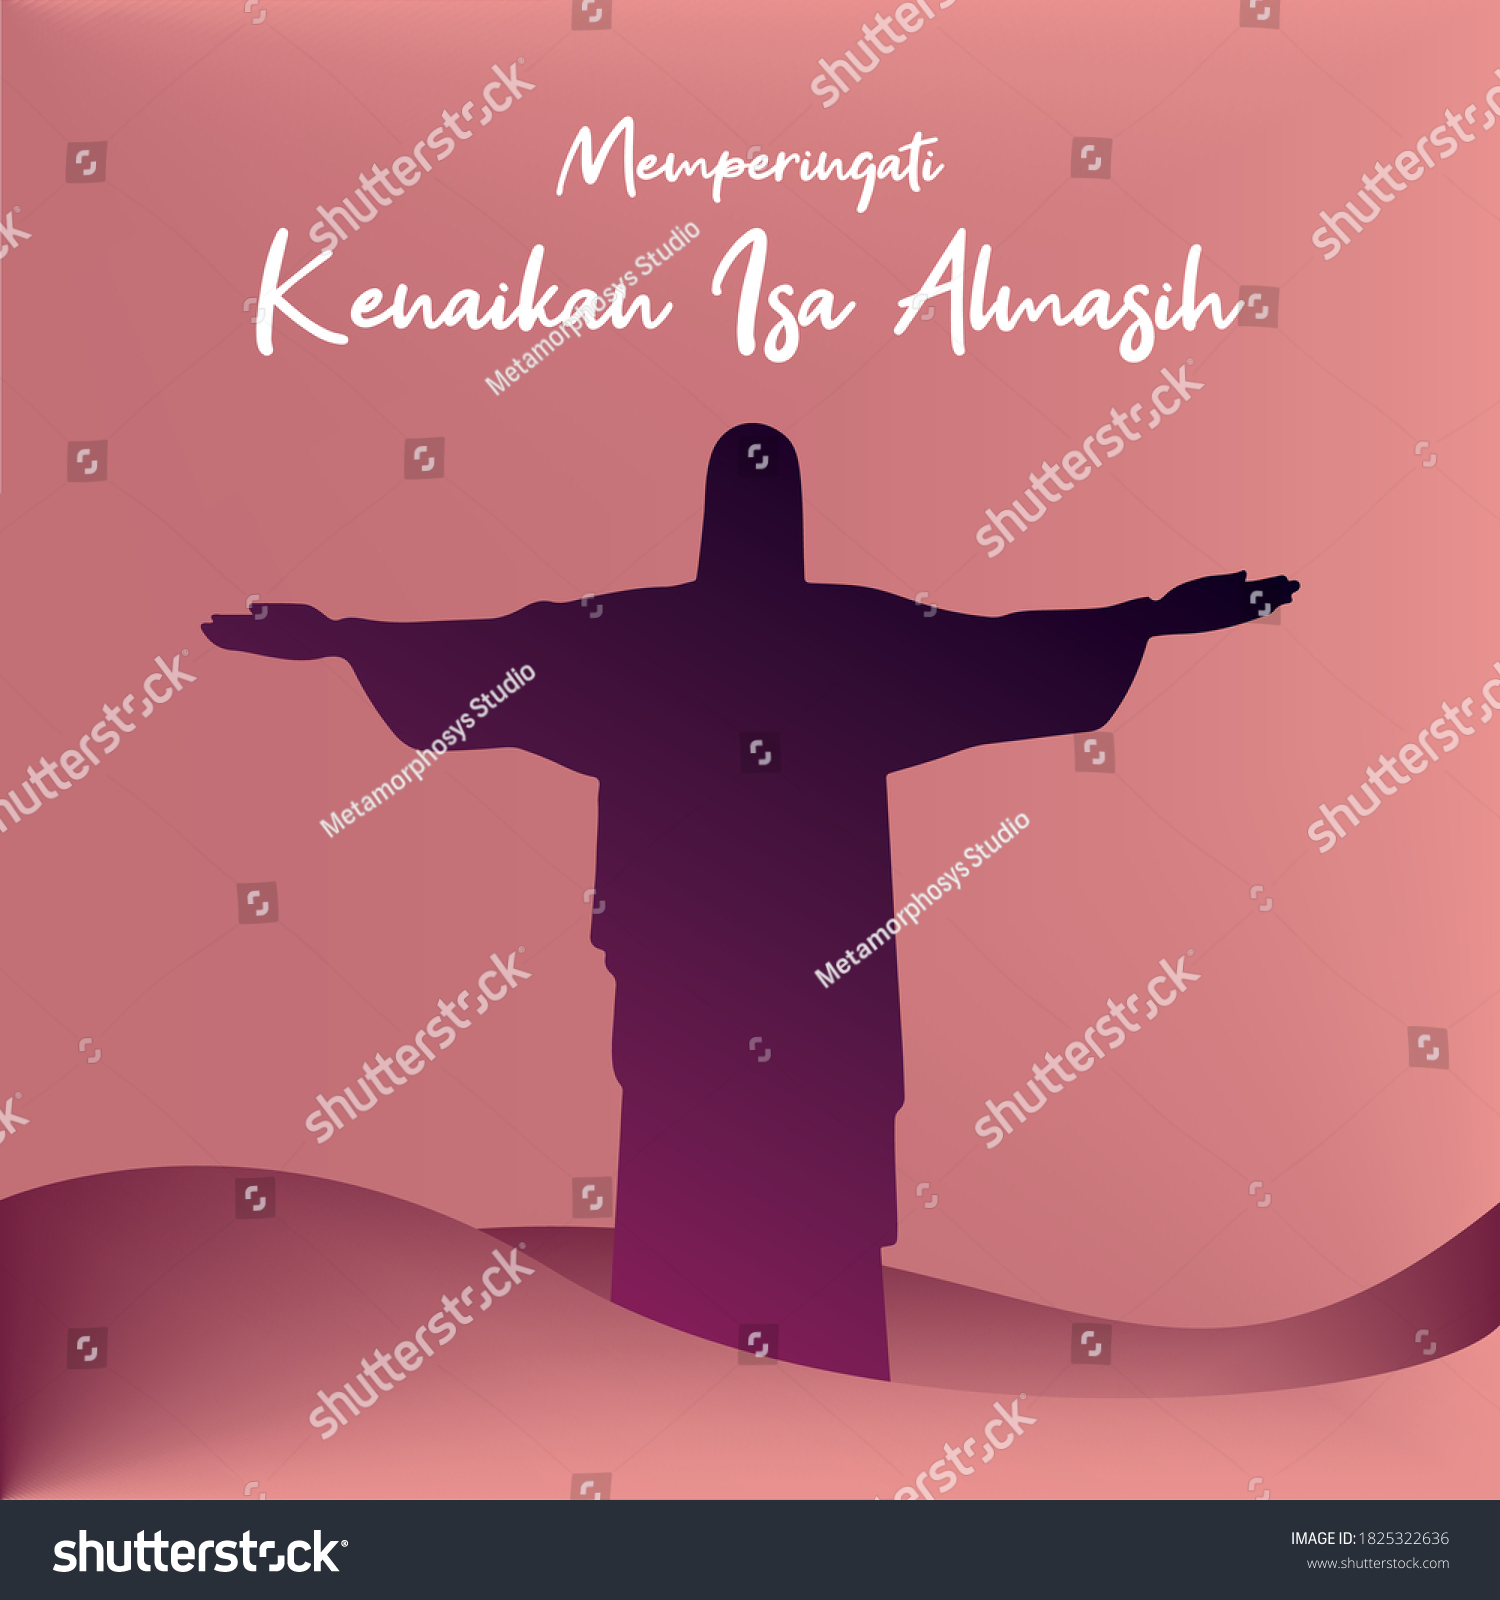 SVG of Greeting Card, Memperingati Kenaikan Isa Almasih. Translation: The Ascension Day of Jesus Christ with vector illustration silhouette svg